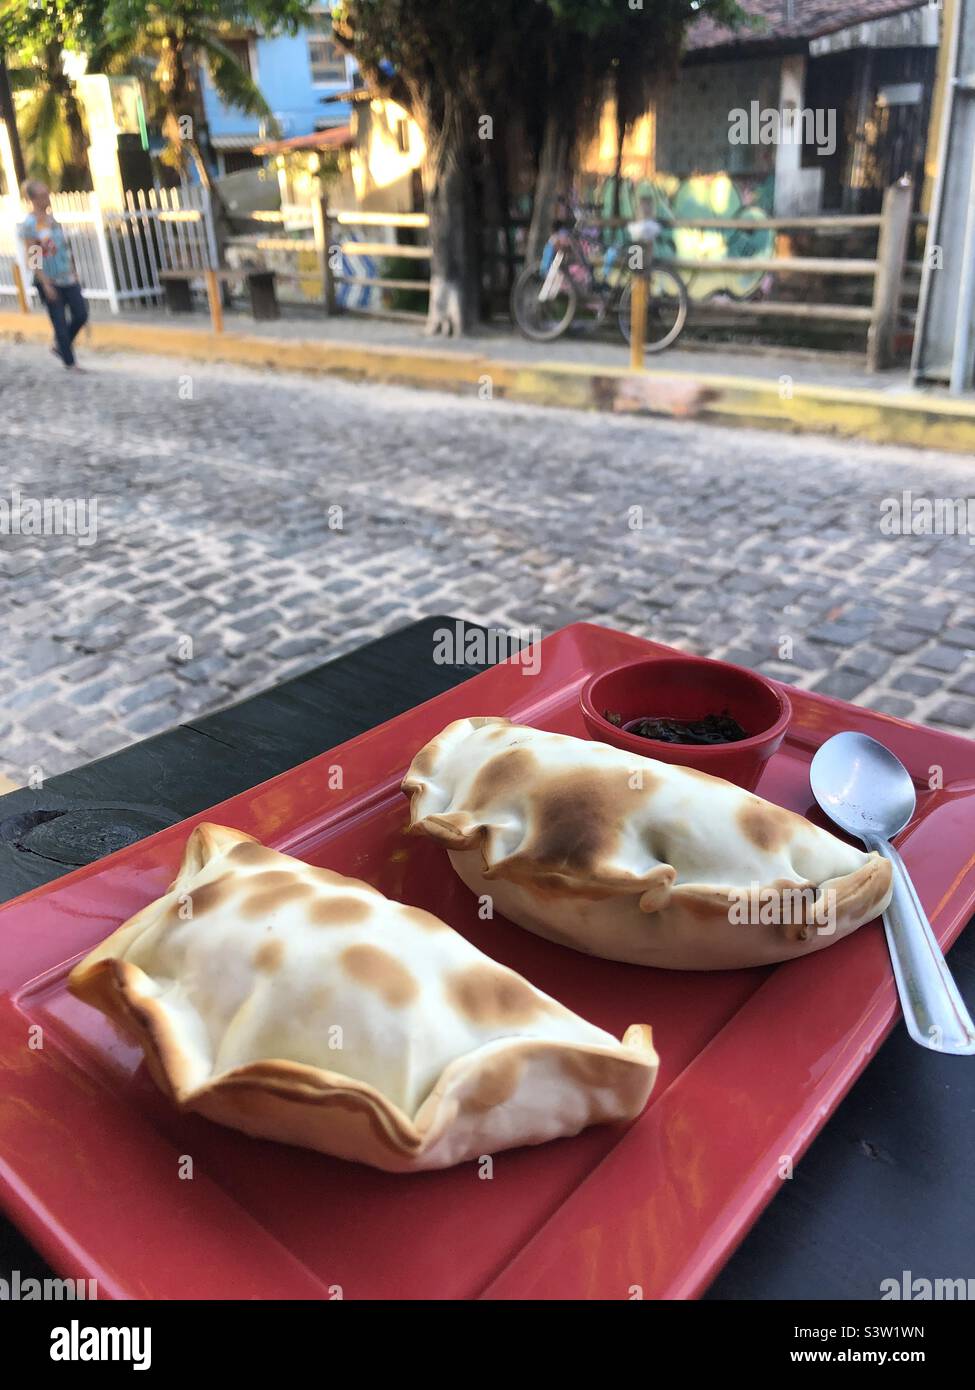 A snack of empanadas. Stock Photo